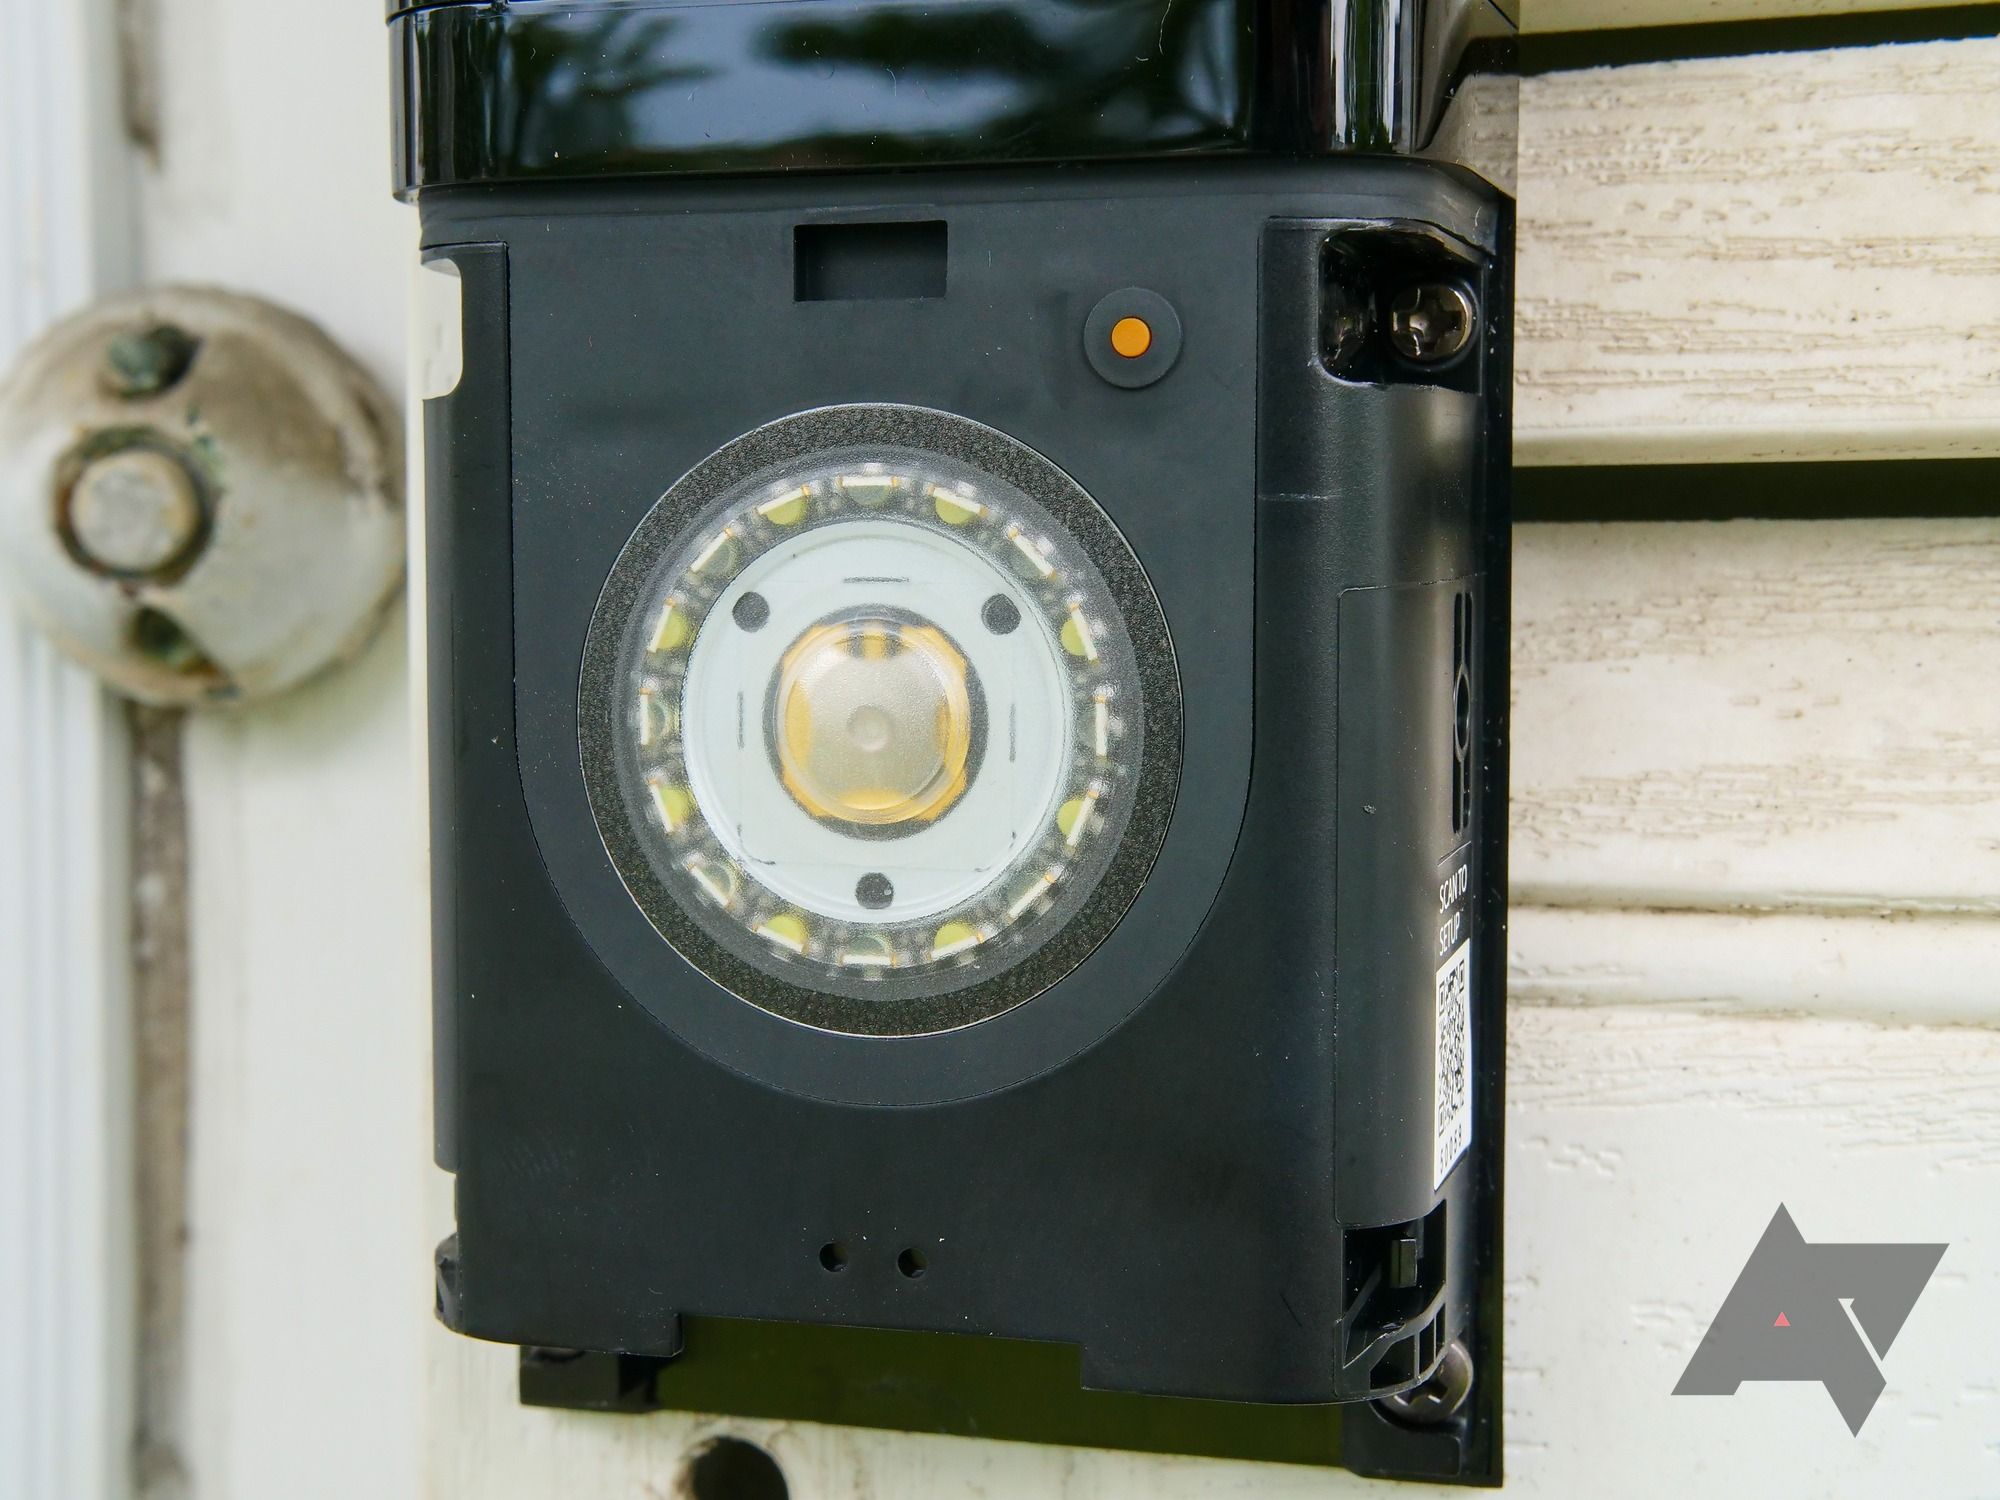 Ring Video Doorbell 4 review: pre-roll is a battery bell gamechanger